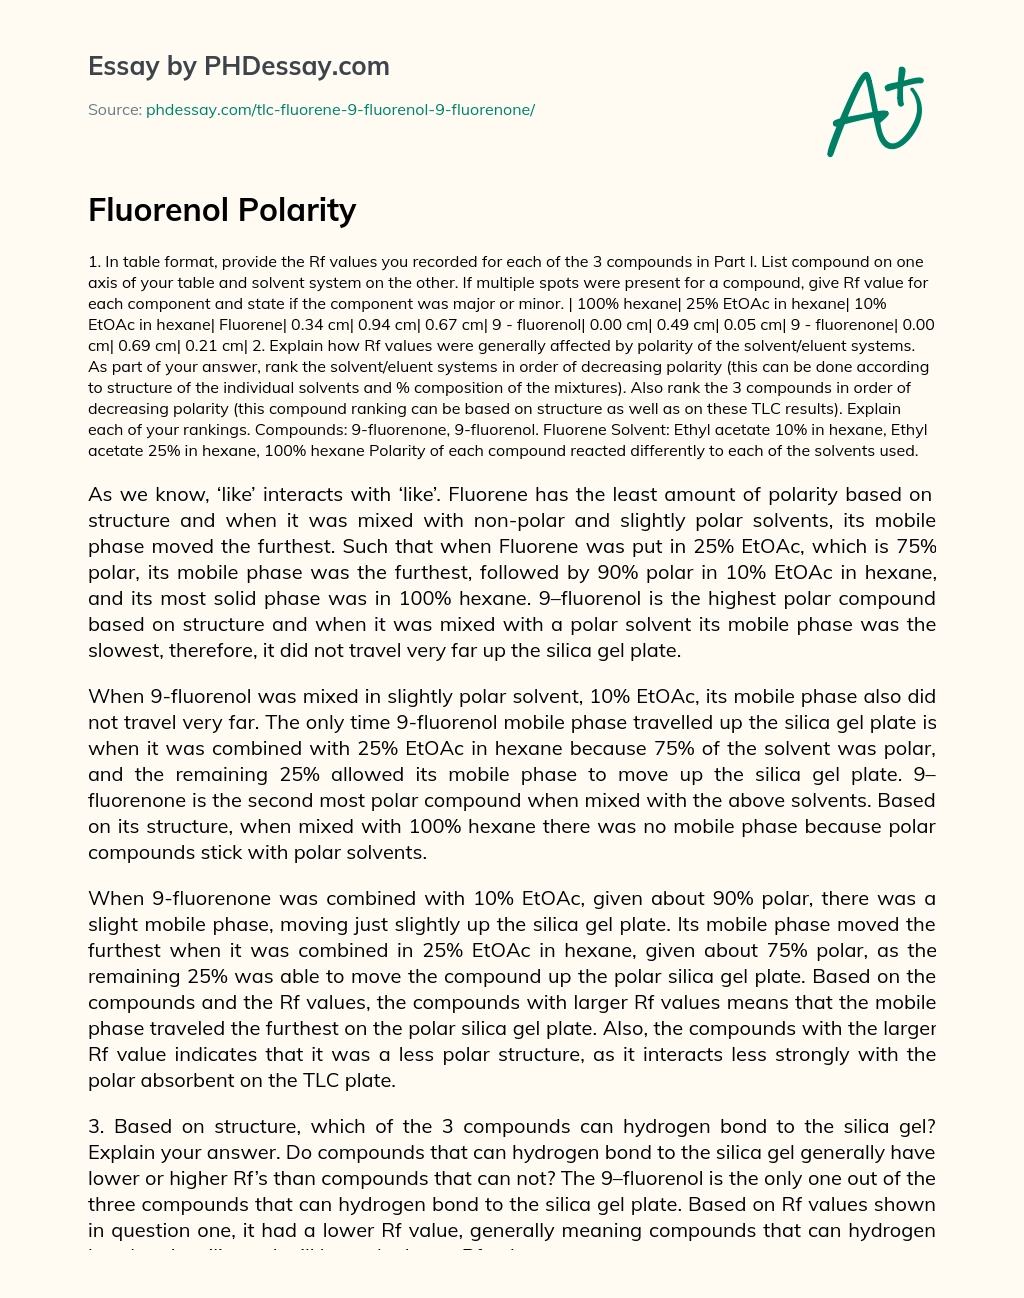 Fluorenol Polarity essay